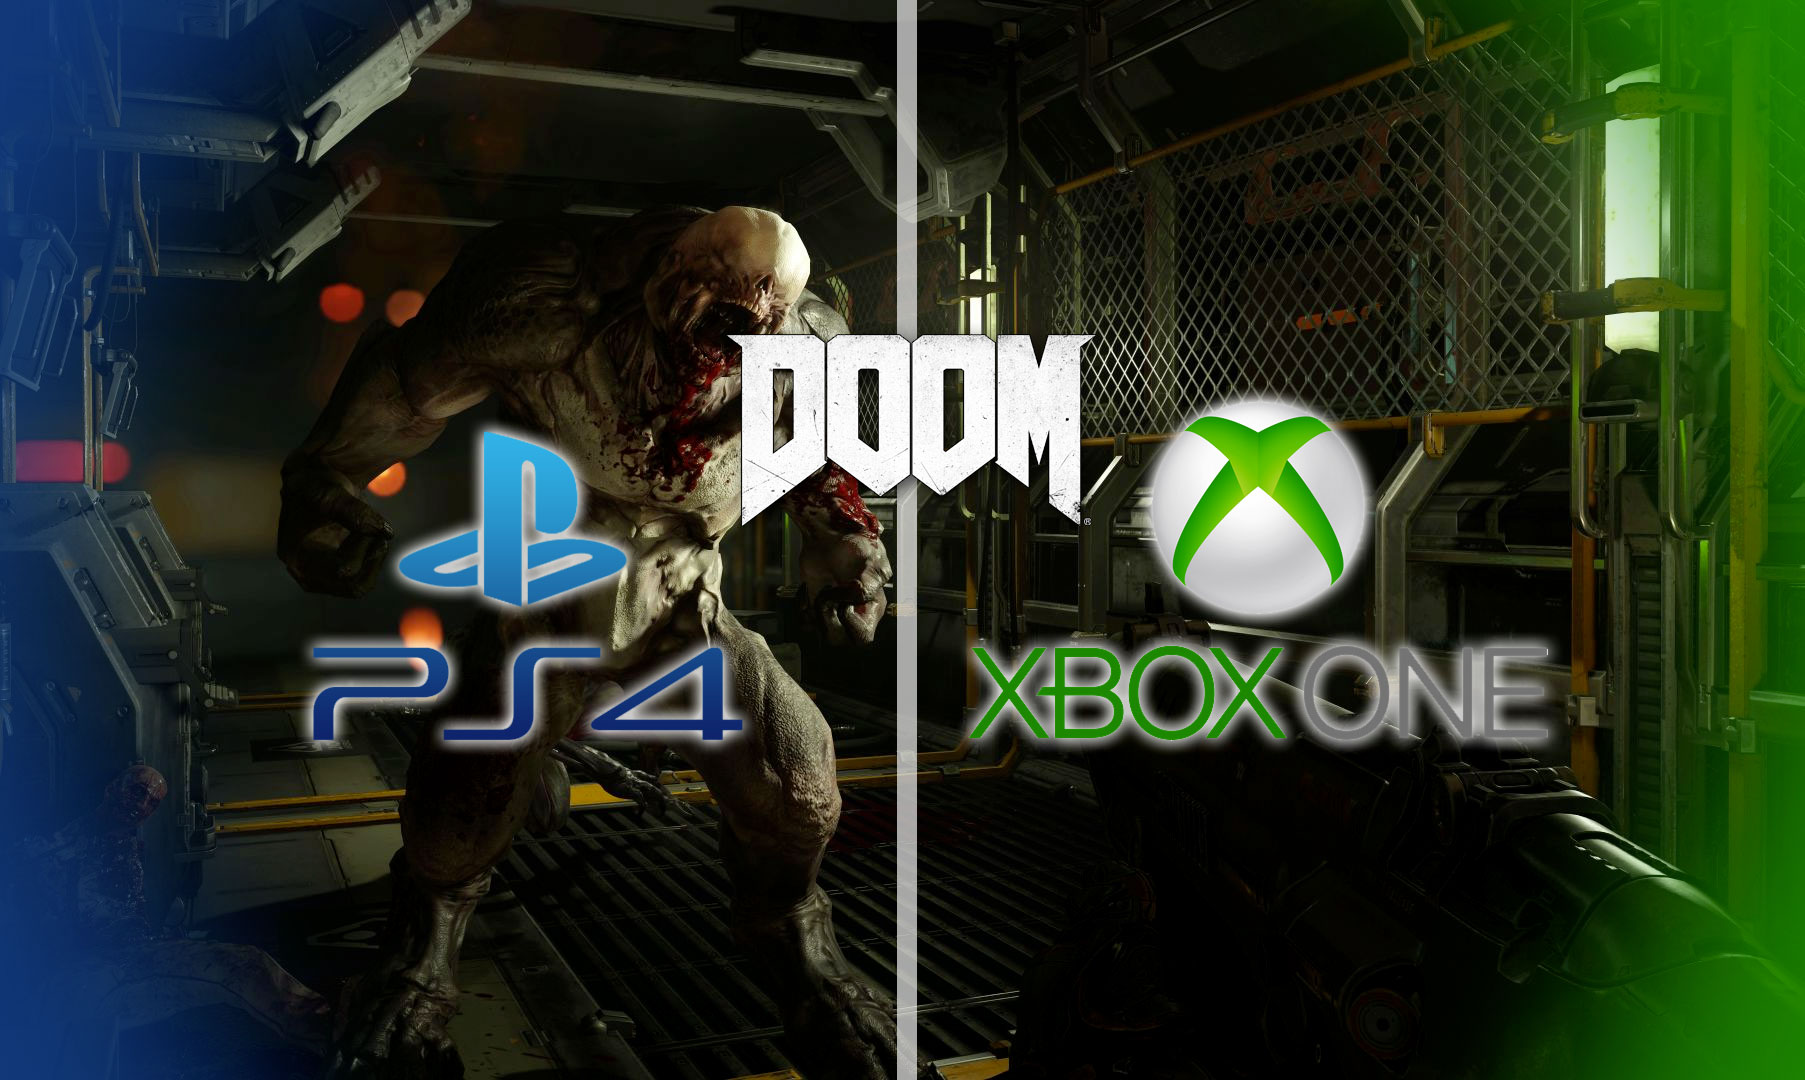 DOOM: Playstation 4 vs Xbox One